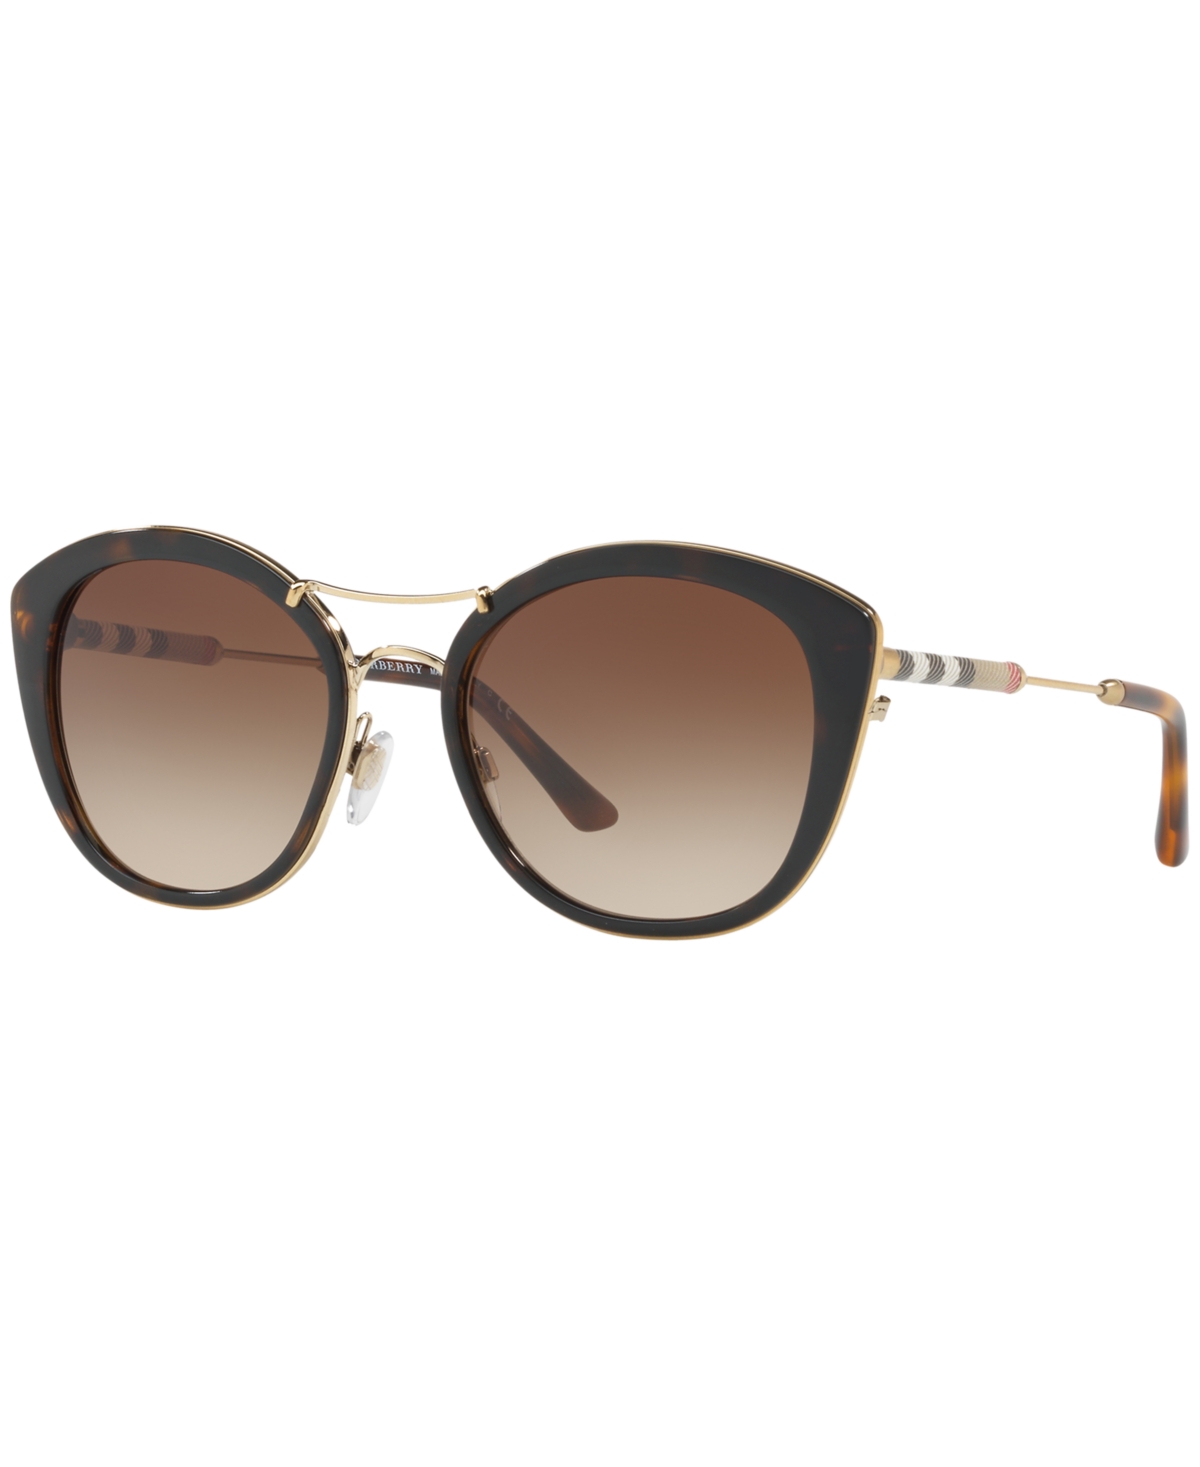 Burberry Women's Sunglasses, Be4251q In Brown,brown Gradient